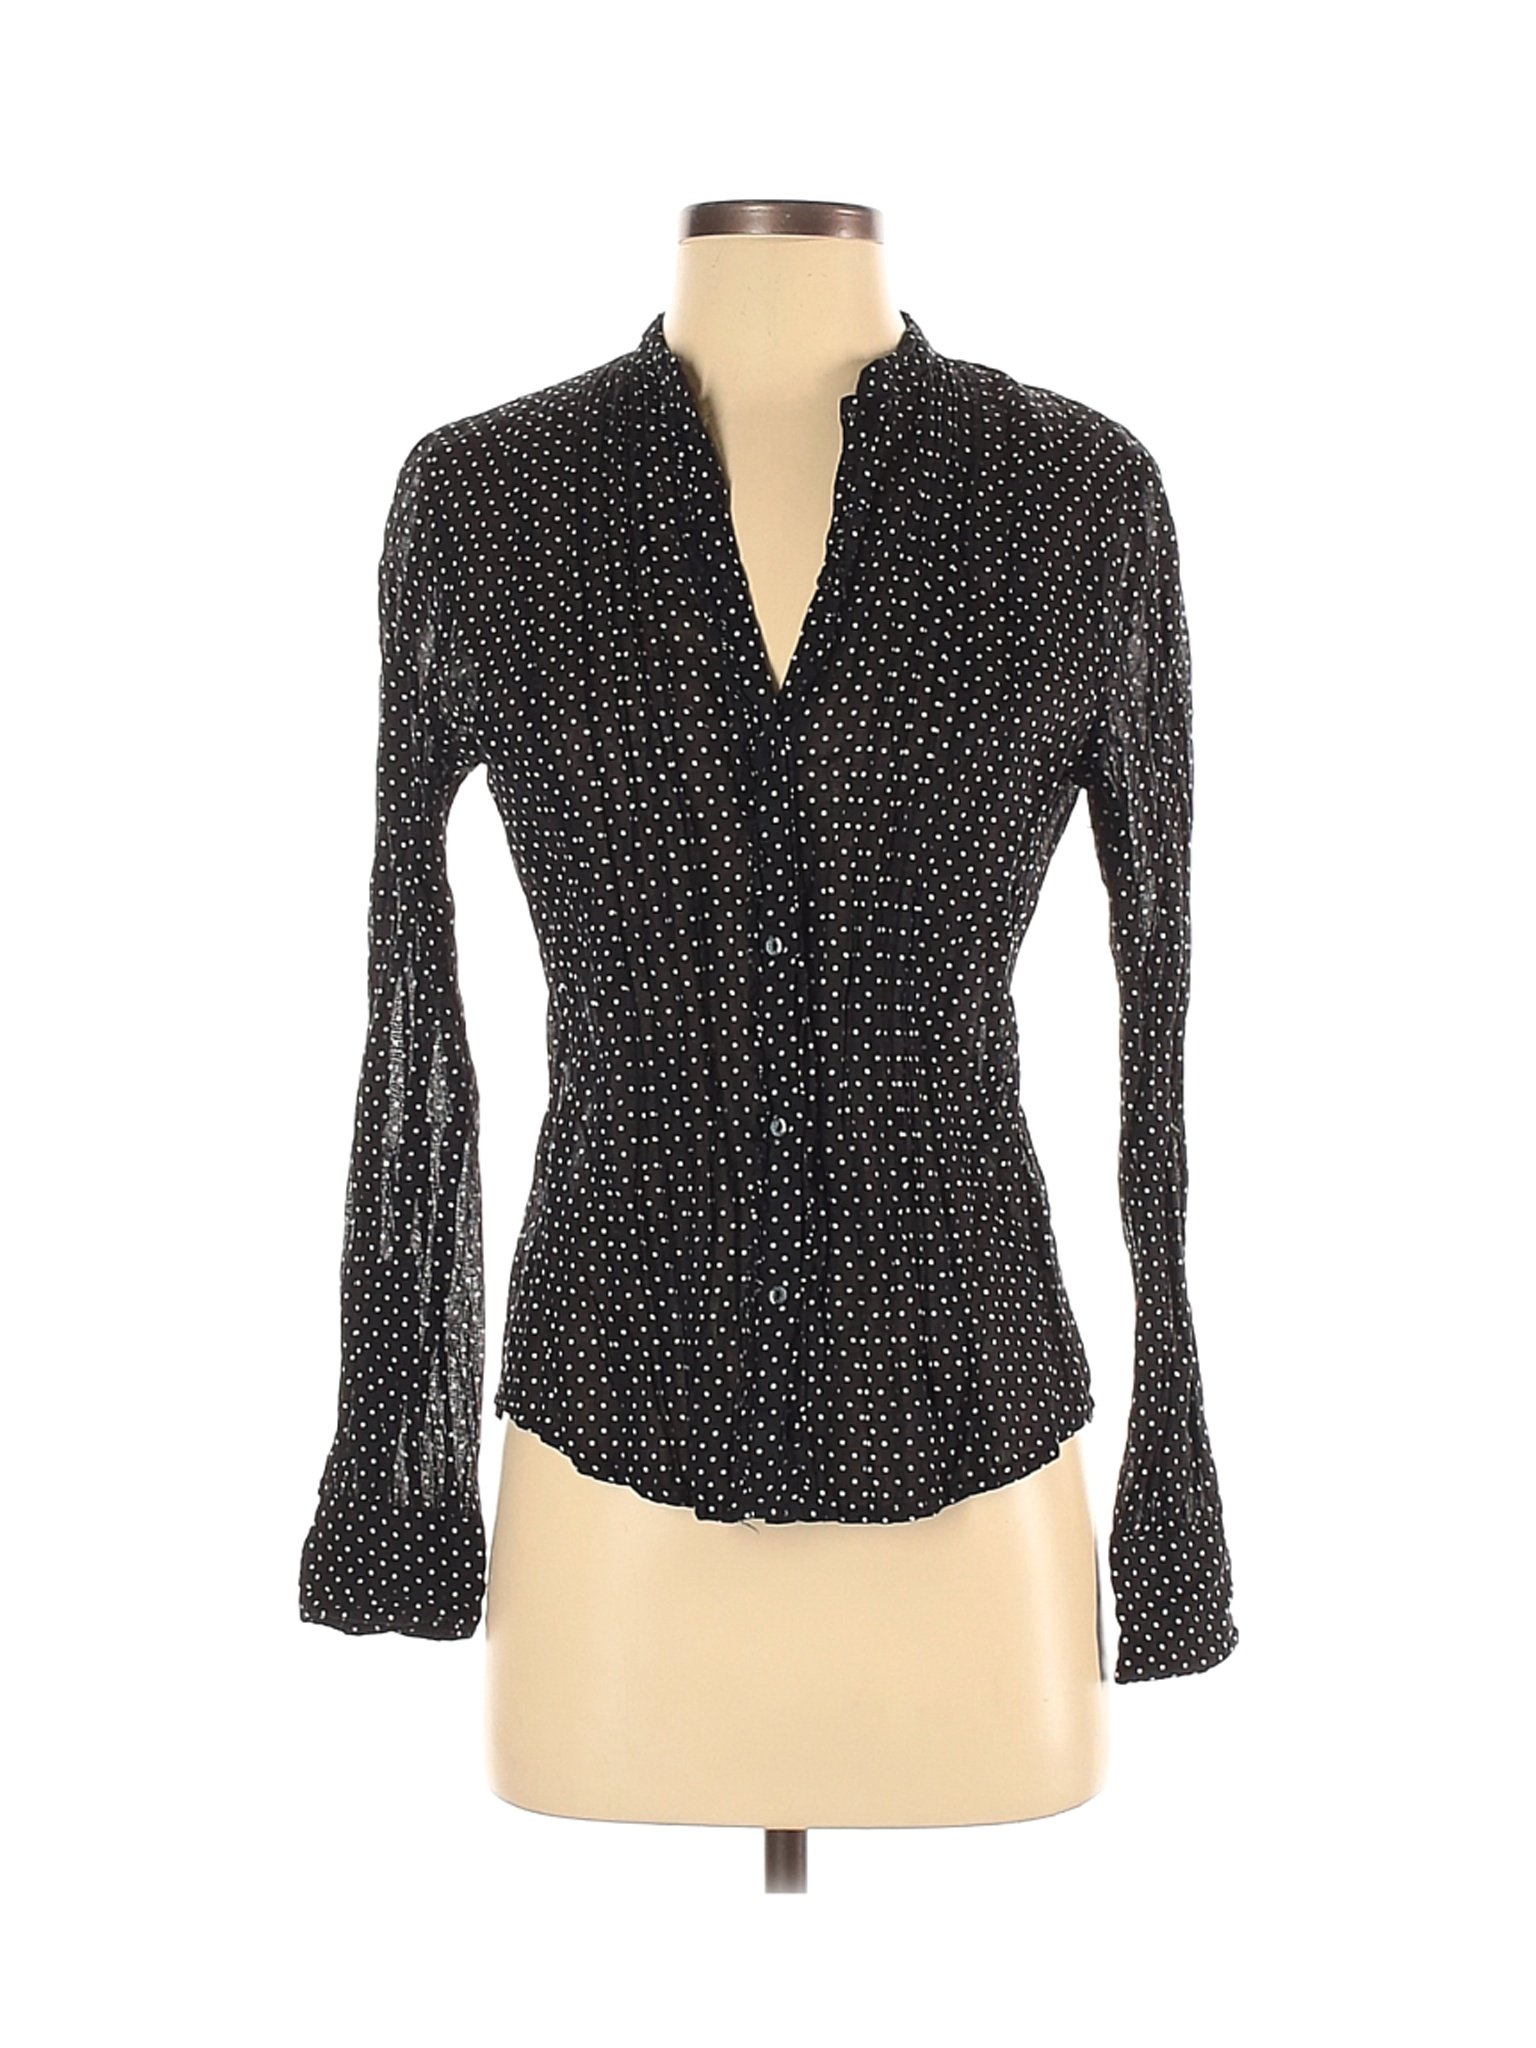 Old Navy Women Black Long Sleeve Button-Down Shirt S | eBay